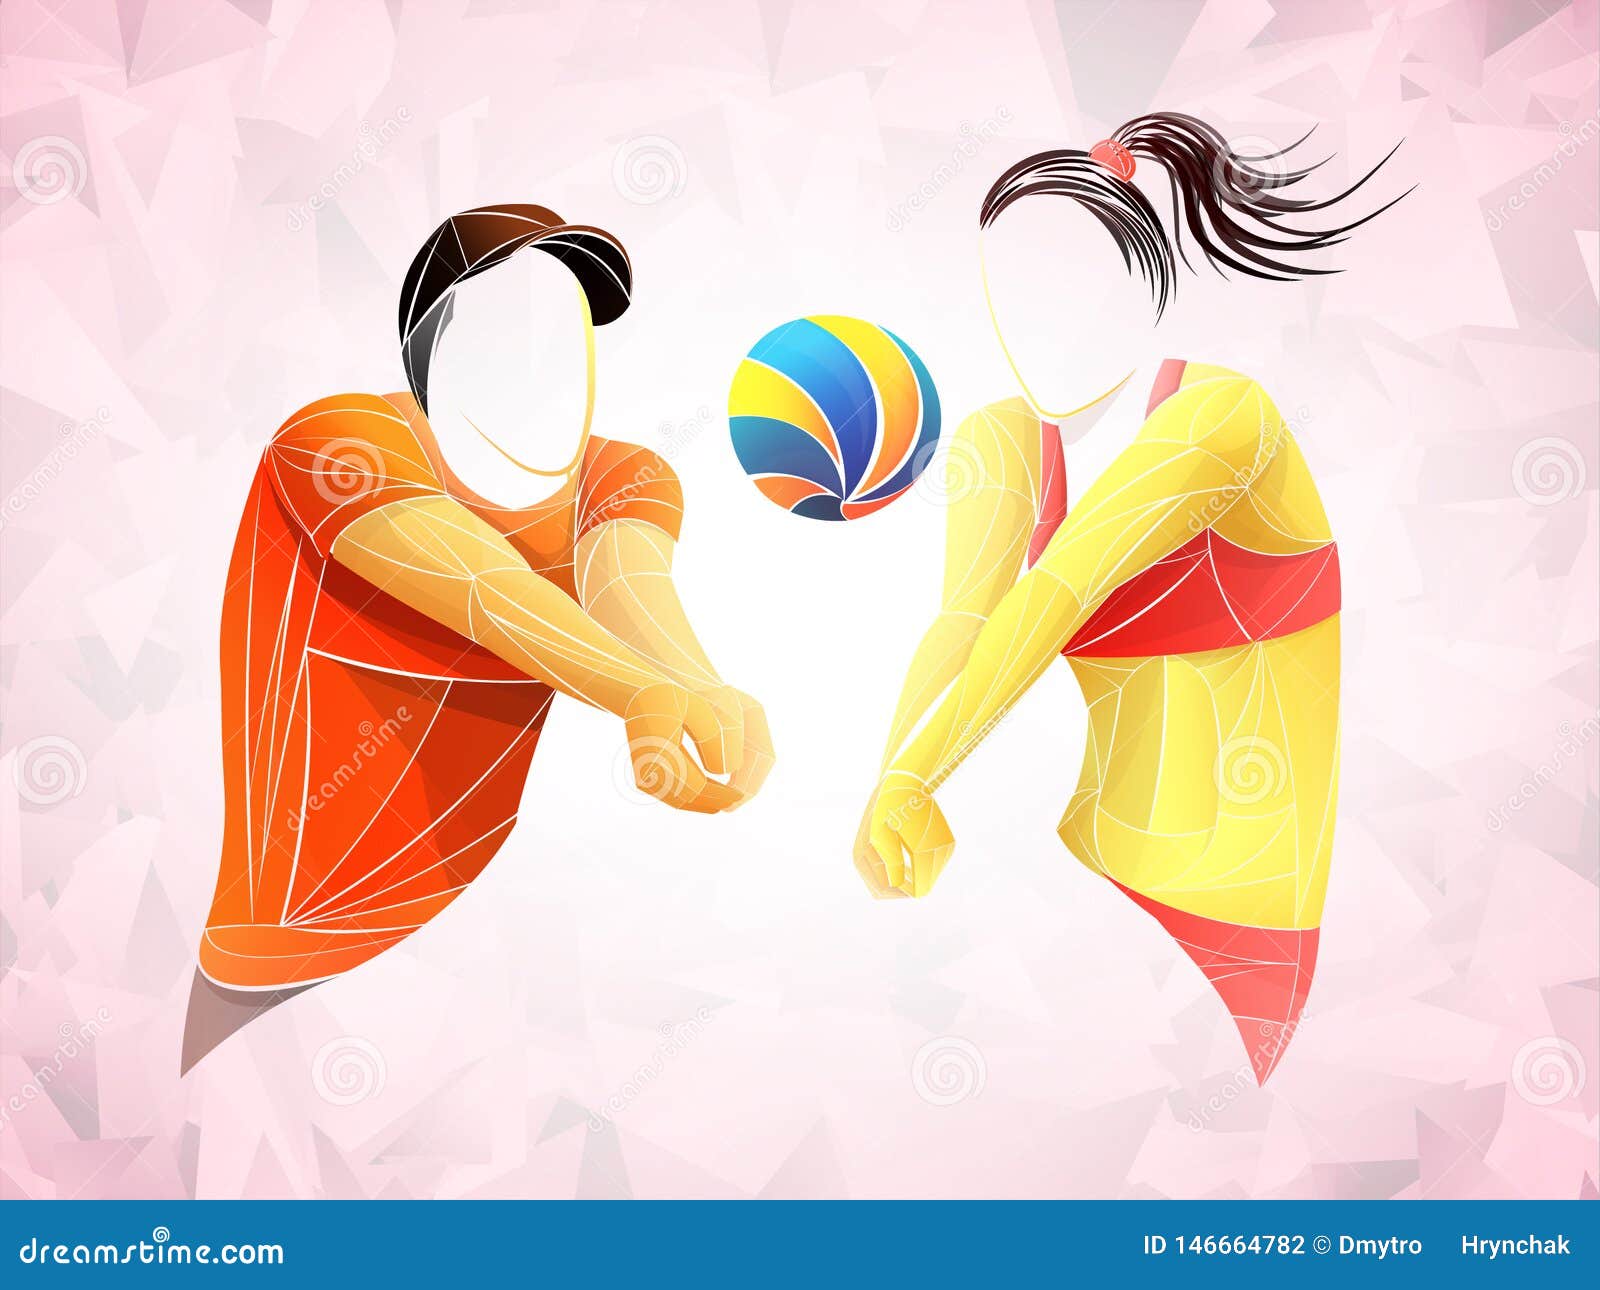 International Volleyball, Volleyball Live, Play Volleyball, Women Volleyball, Volleyball Player Stock Illustration